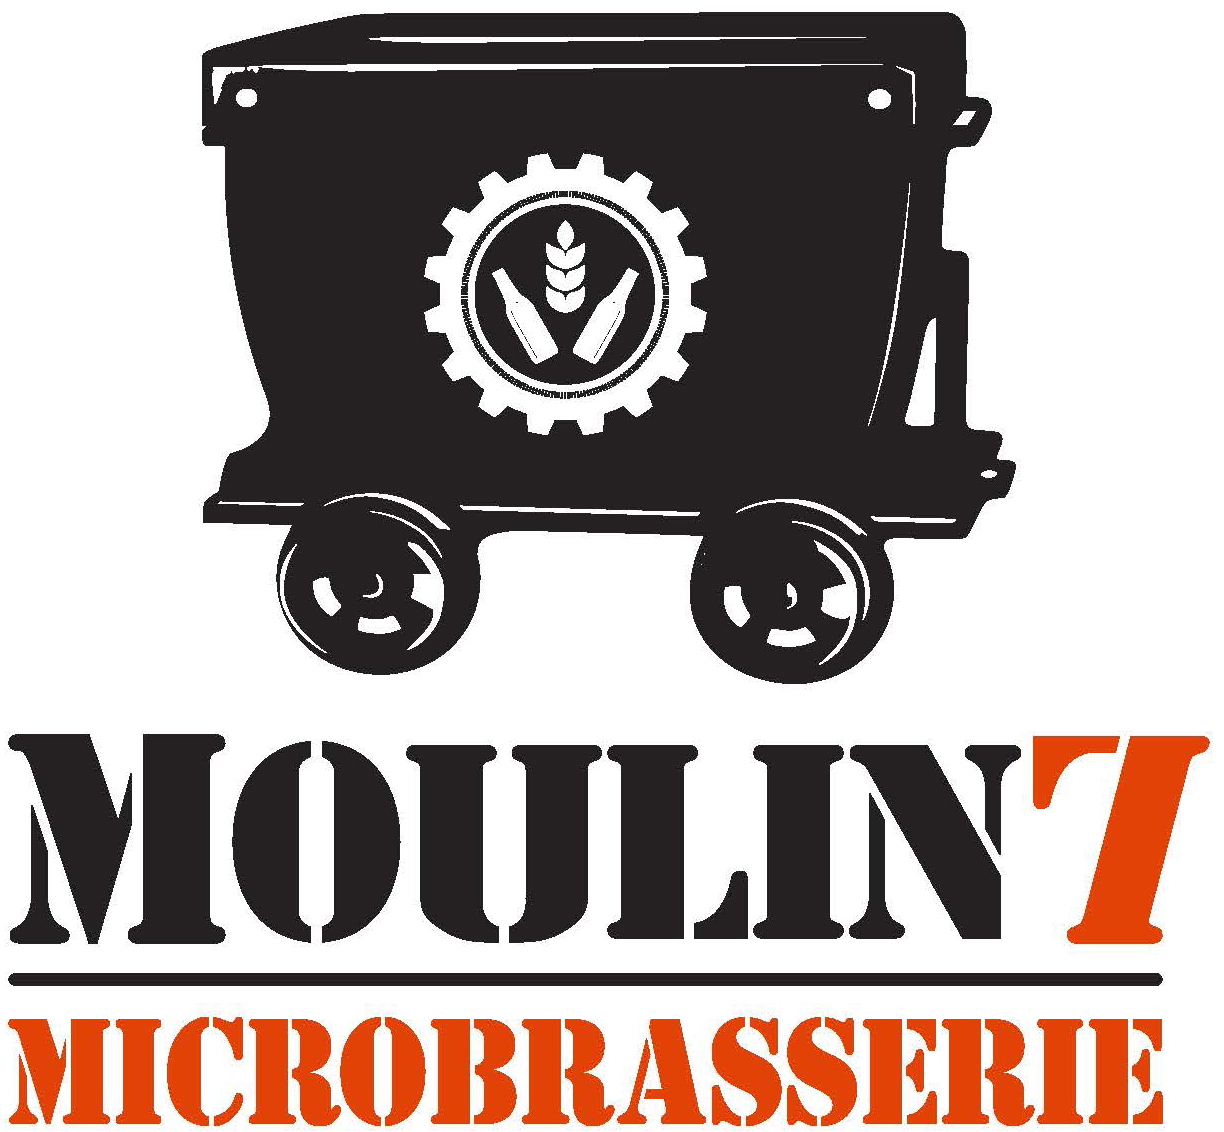 Microbrasserie Moulin7